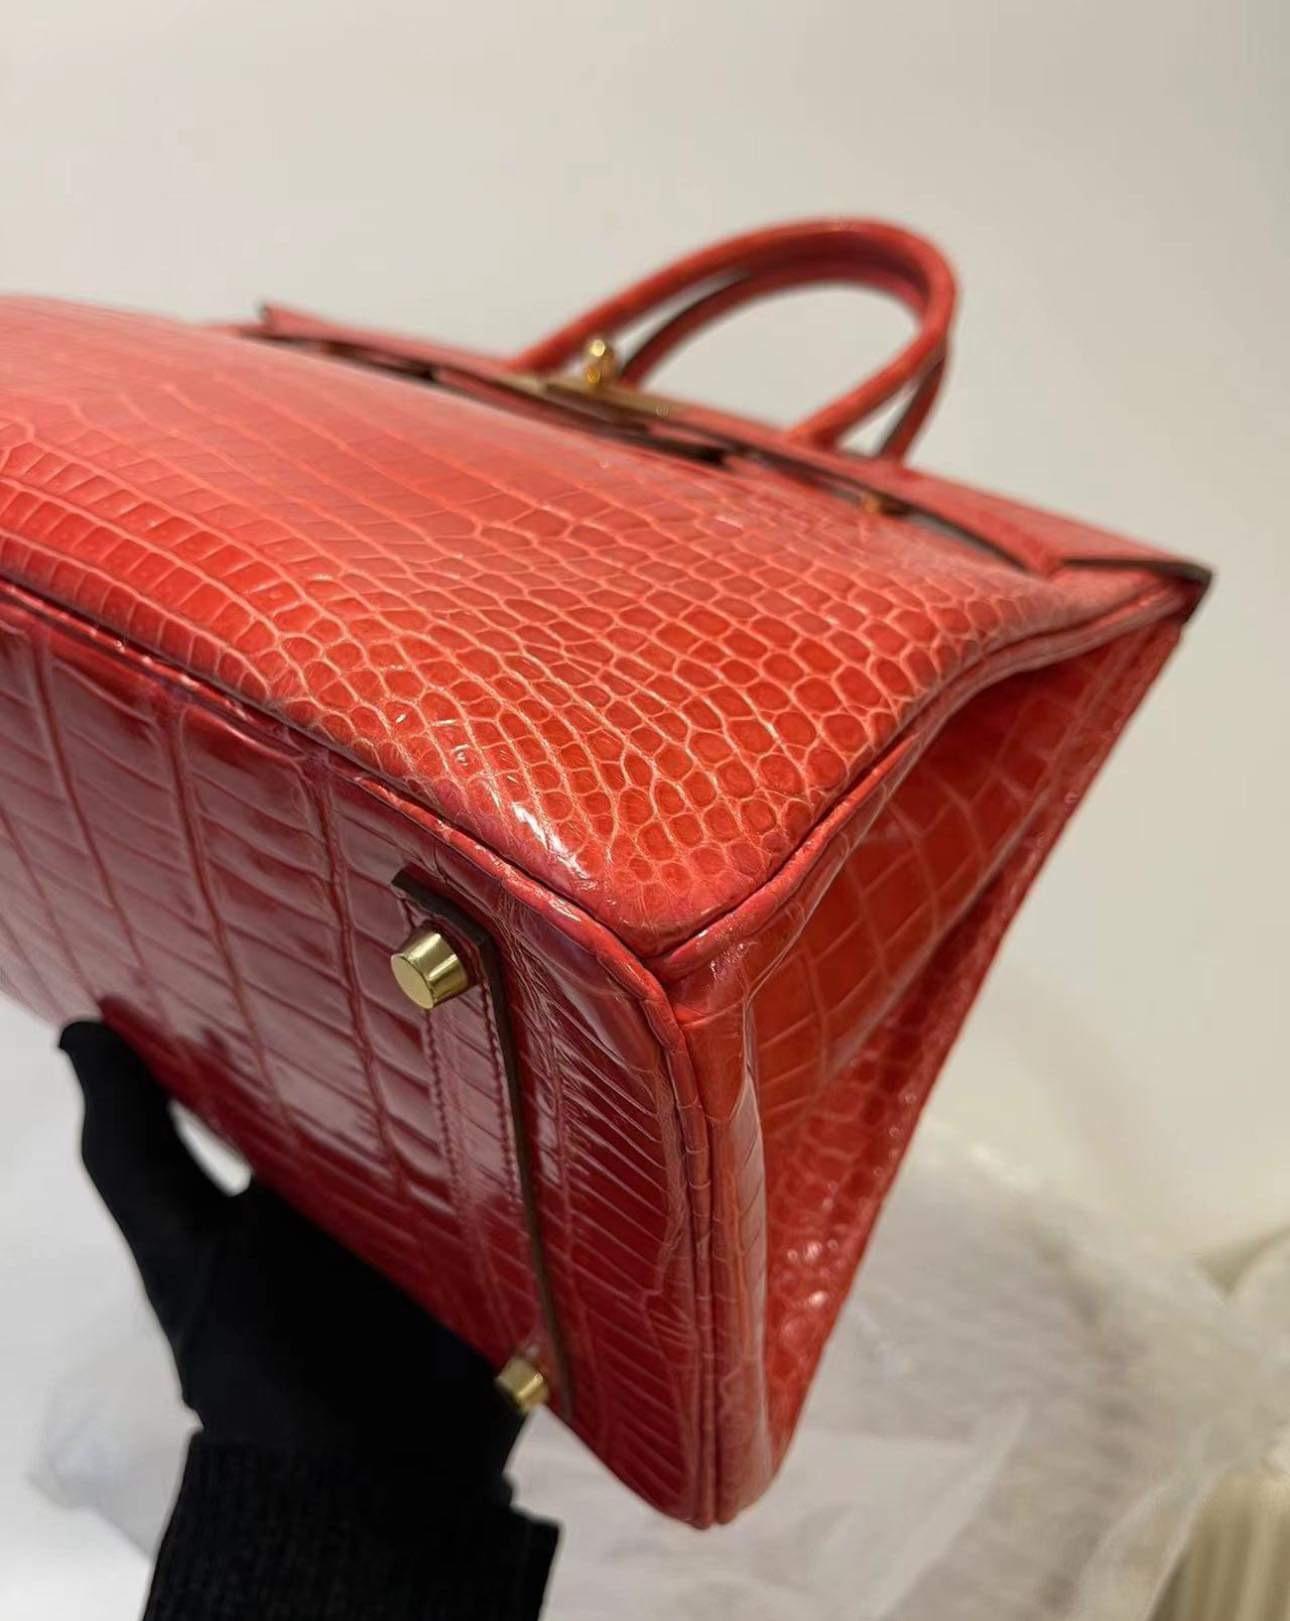 Hermes Birkin 35 Shiny Red Porosus Crocodile Bag with Gold Hardware 4